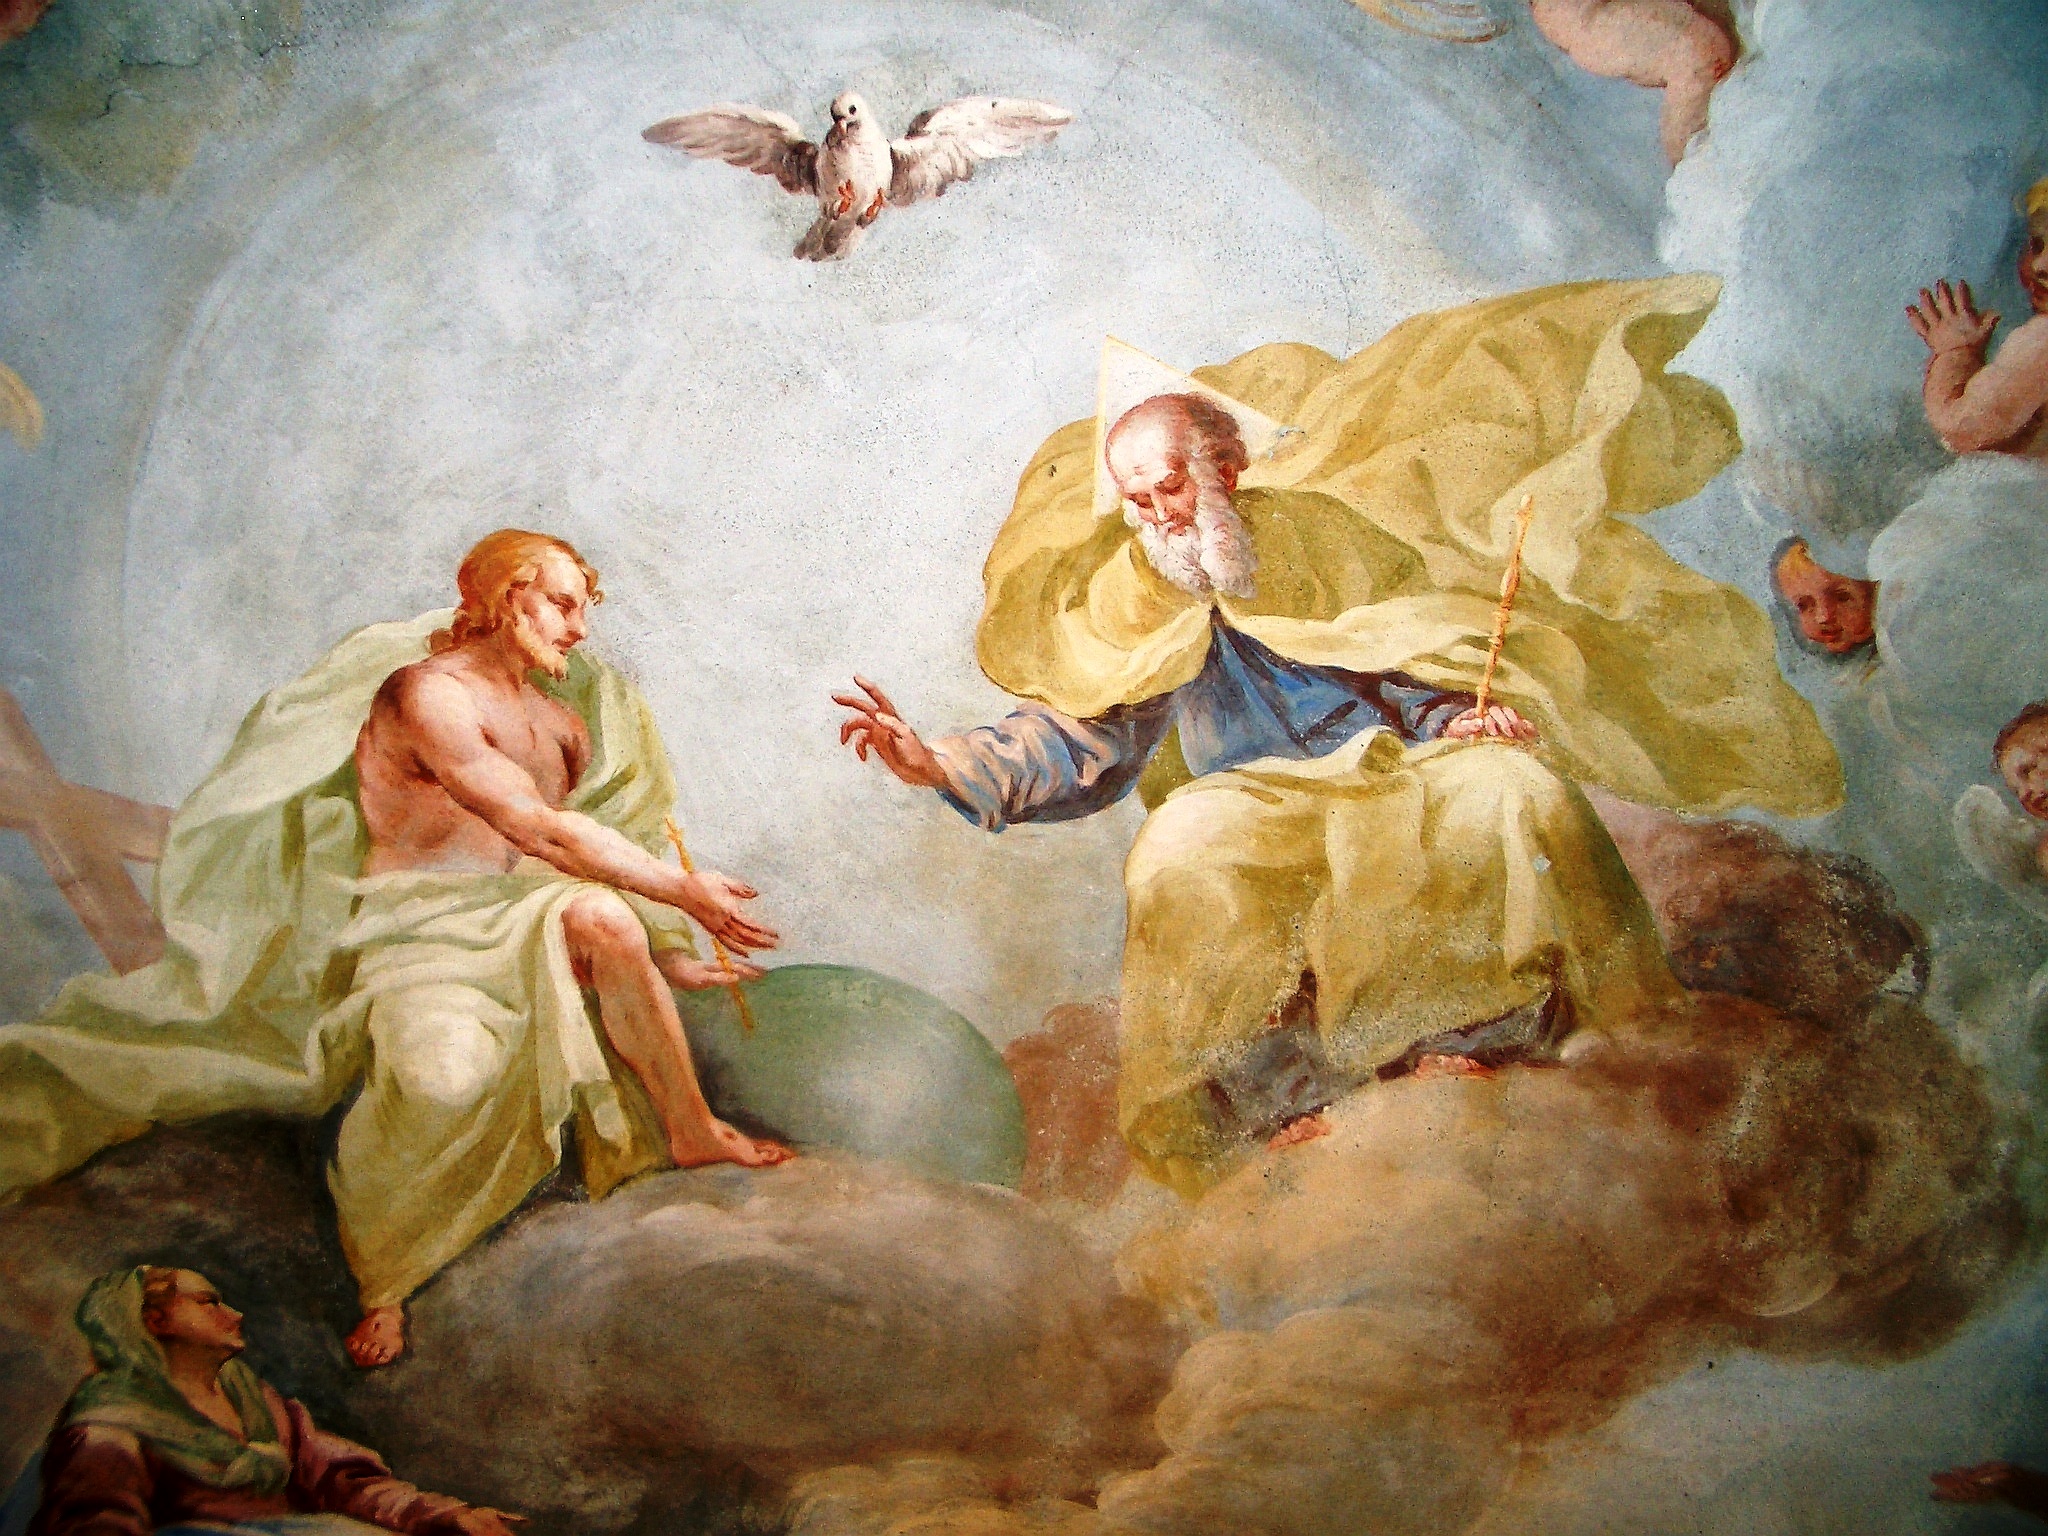 https://arquimedia.s3.amazonaws.com/27/jesus/luca-rossetti-trinita-chiesa-san-gaudenzio-ivreajpg.jpg